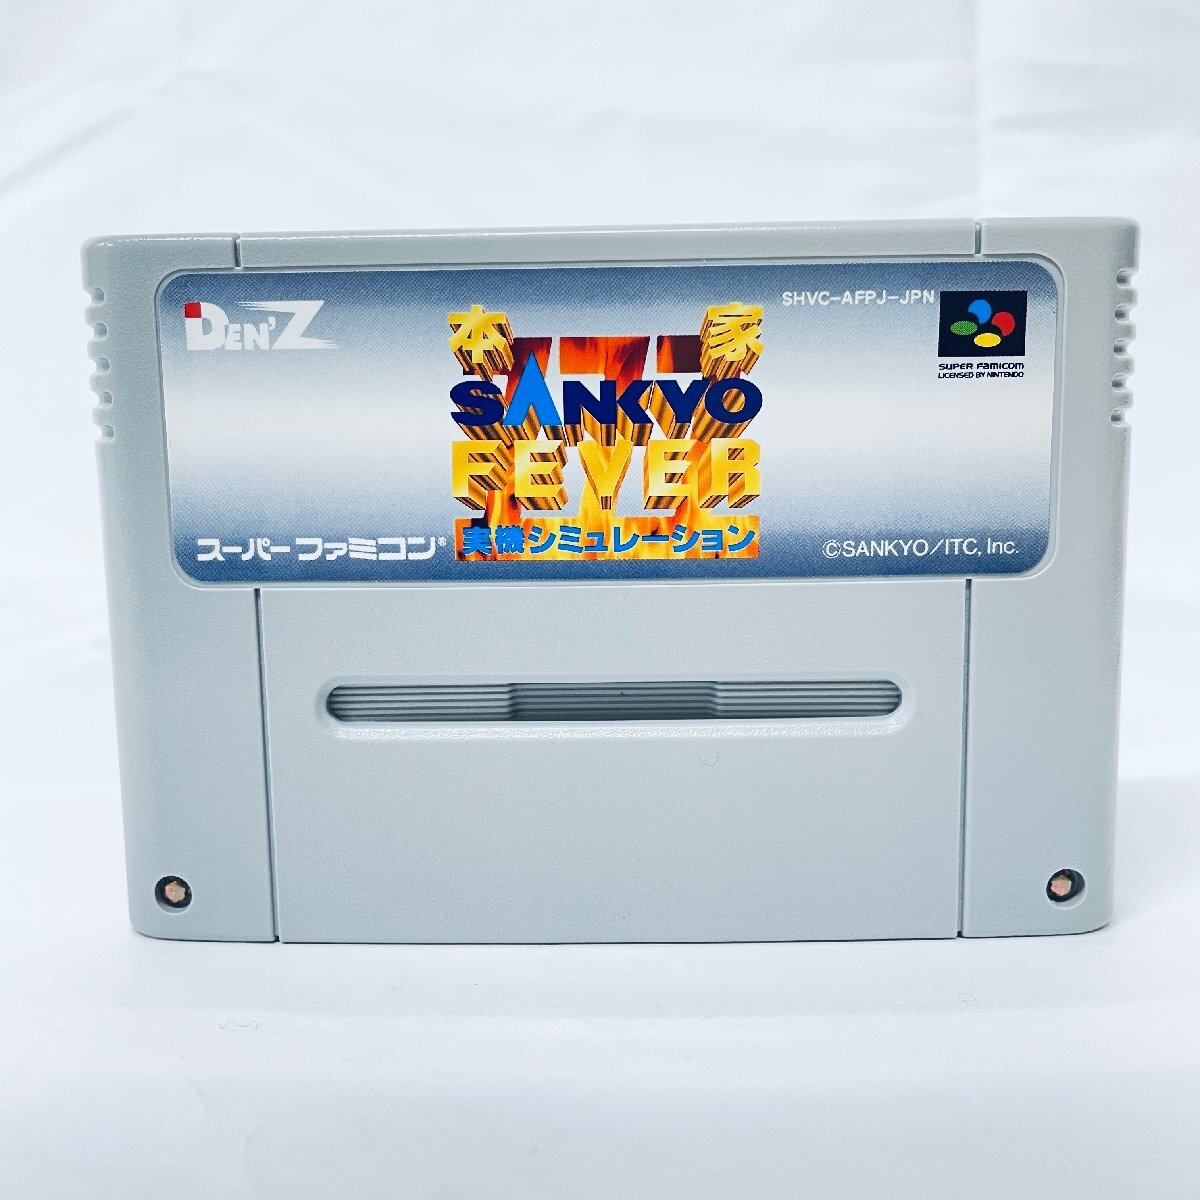 SFC Super Famicom книга@ дом *SANKYO FEVER аппаратура симуляция soft только пуск проверка settled 